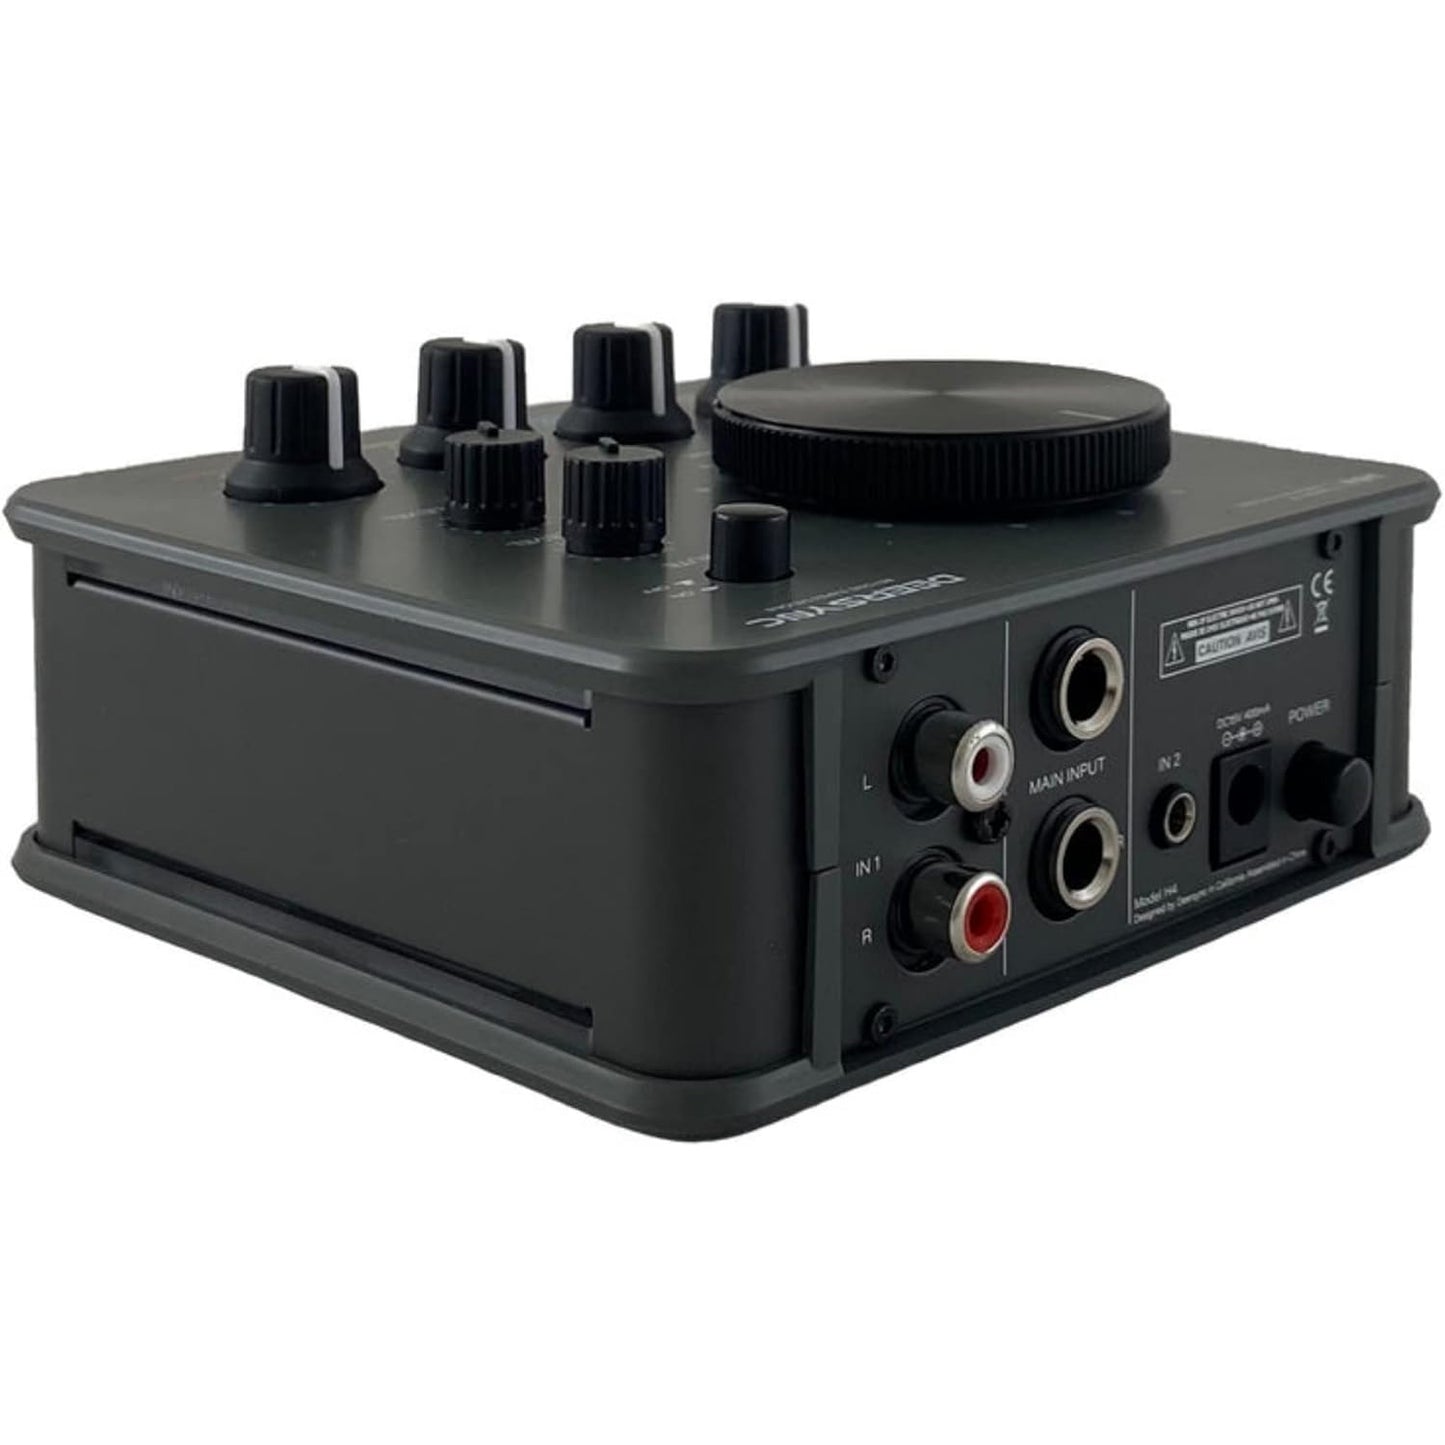 Deersync H4 4 Channel Professional Studio Headphone Amplifier